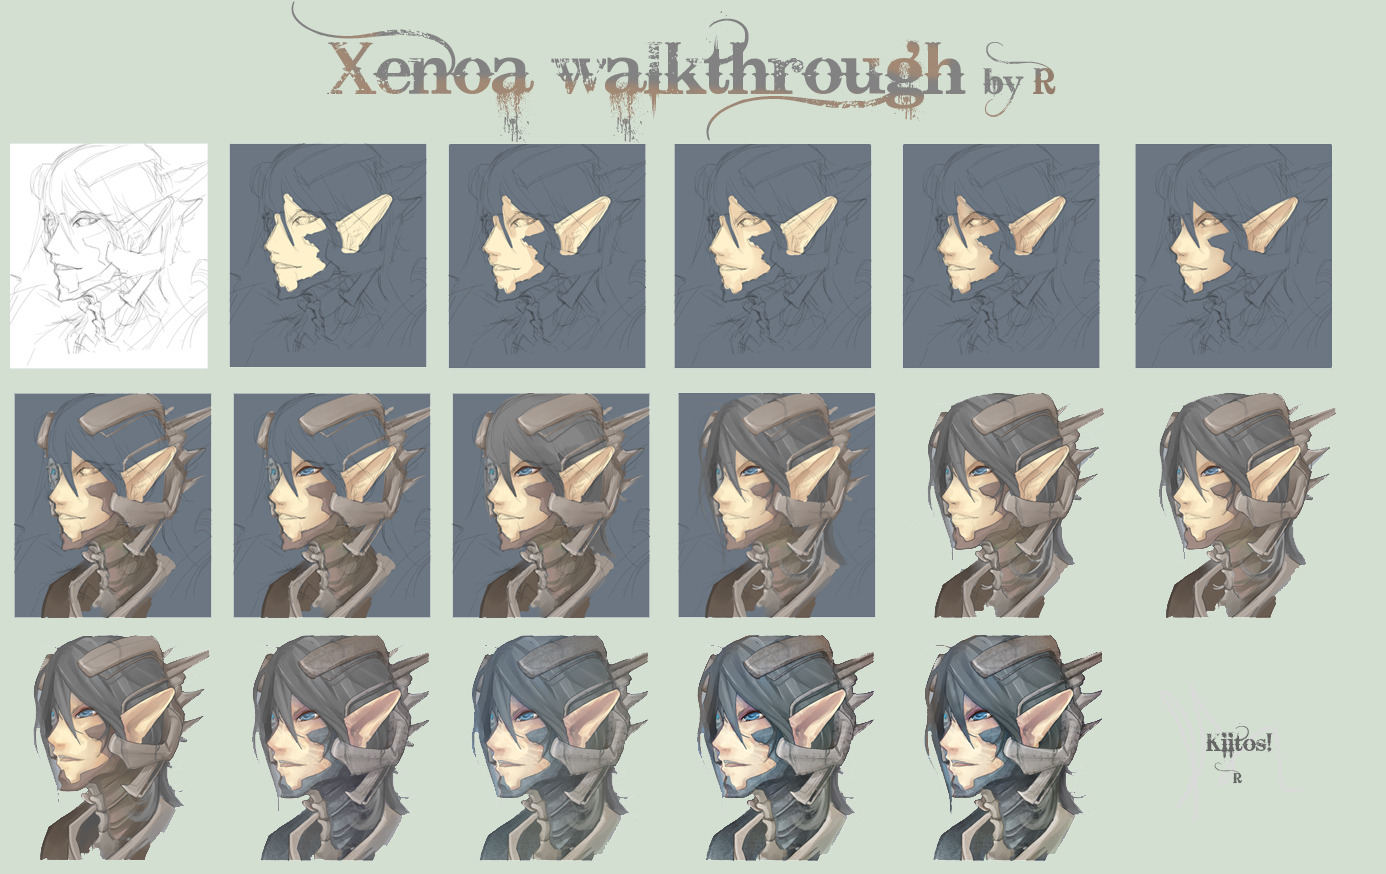 Xenoa walkthrough by ModifiedDevice